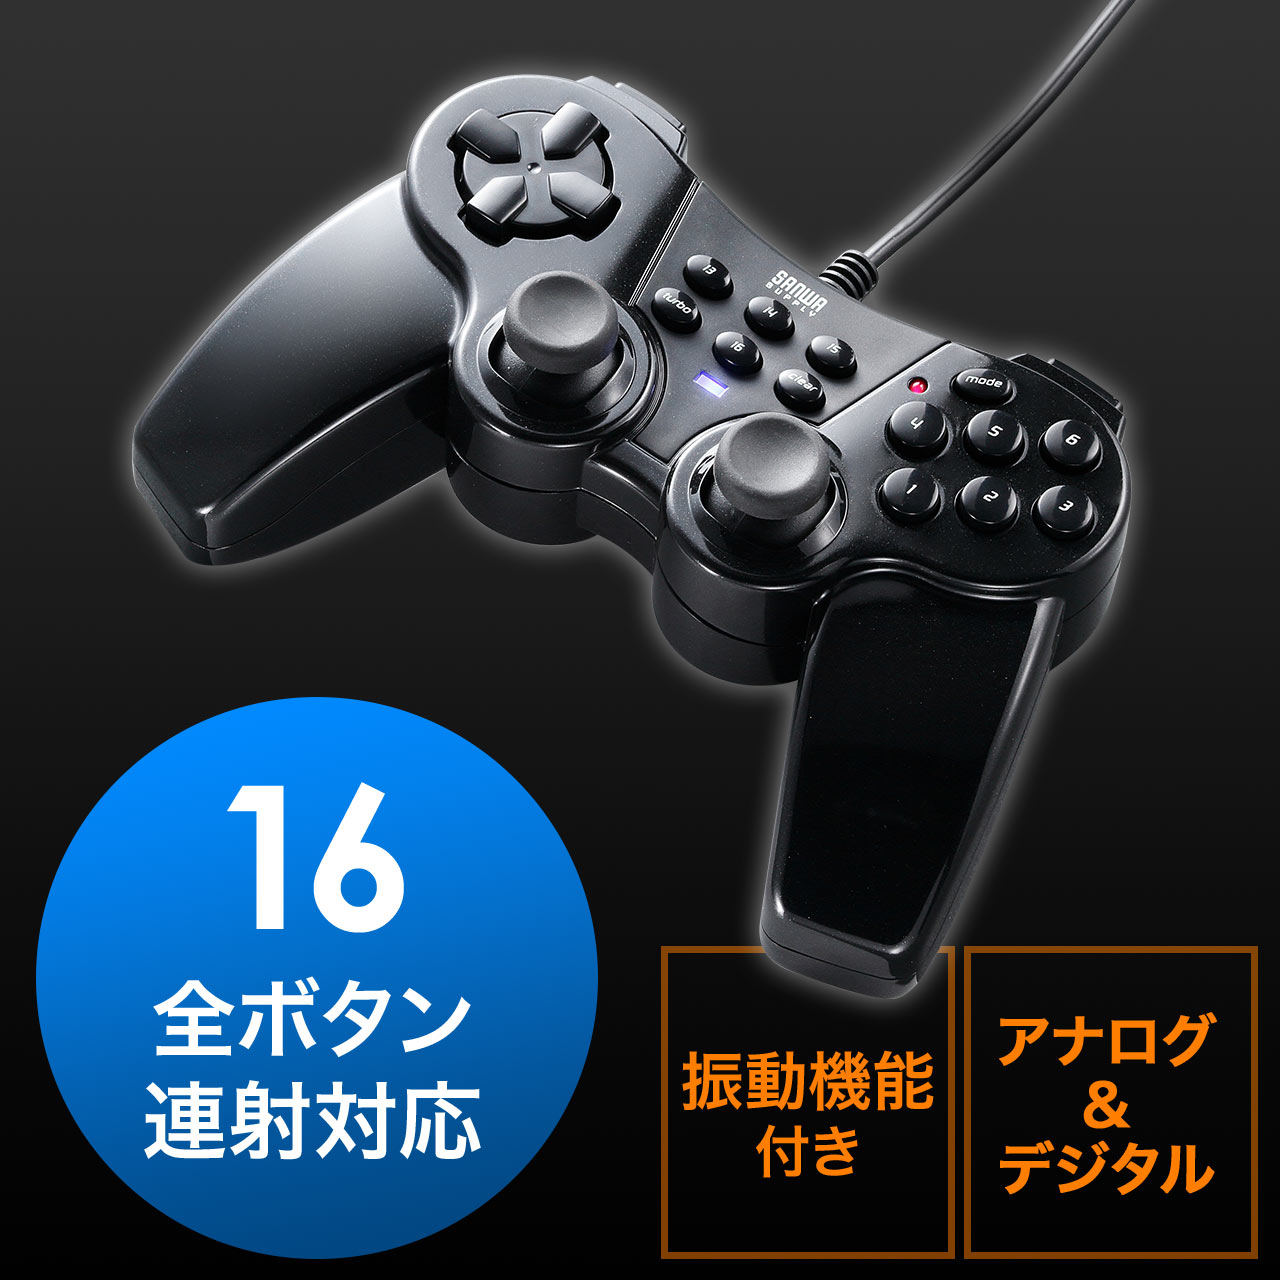 Usbゲームパッド 16ボタン 全ボタン連射対応 振動機能付 日本製高耐久シリコンラバー使用 Windows対応 ブラック 400 Jyp62ubkの販売商品 通販ならサンワダイレクト